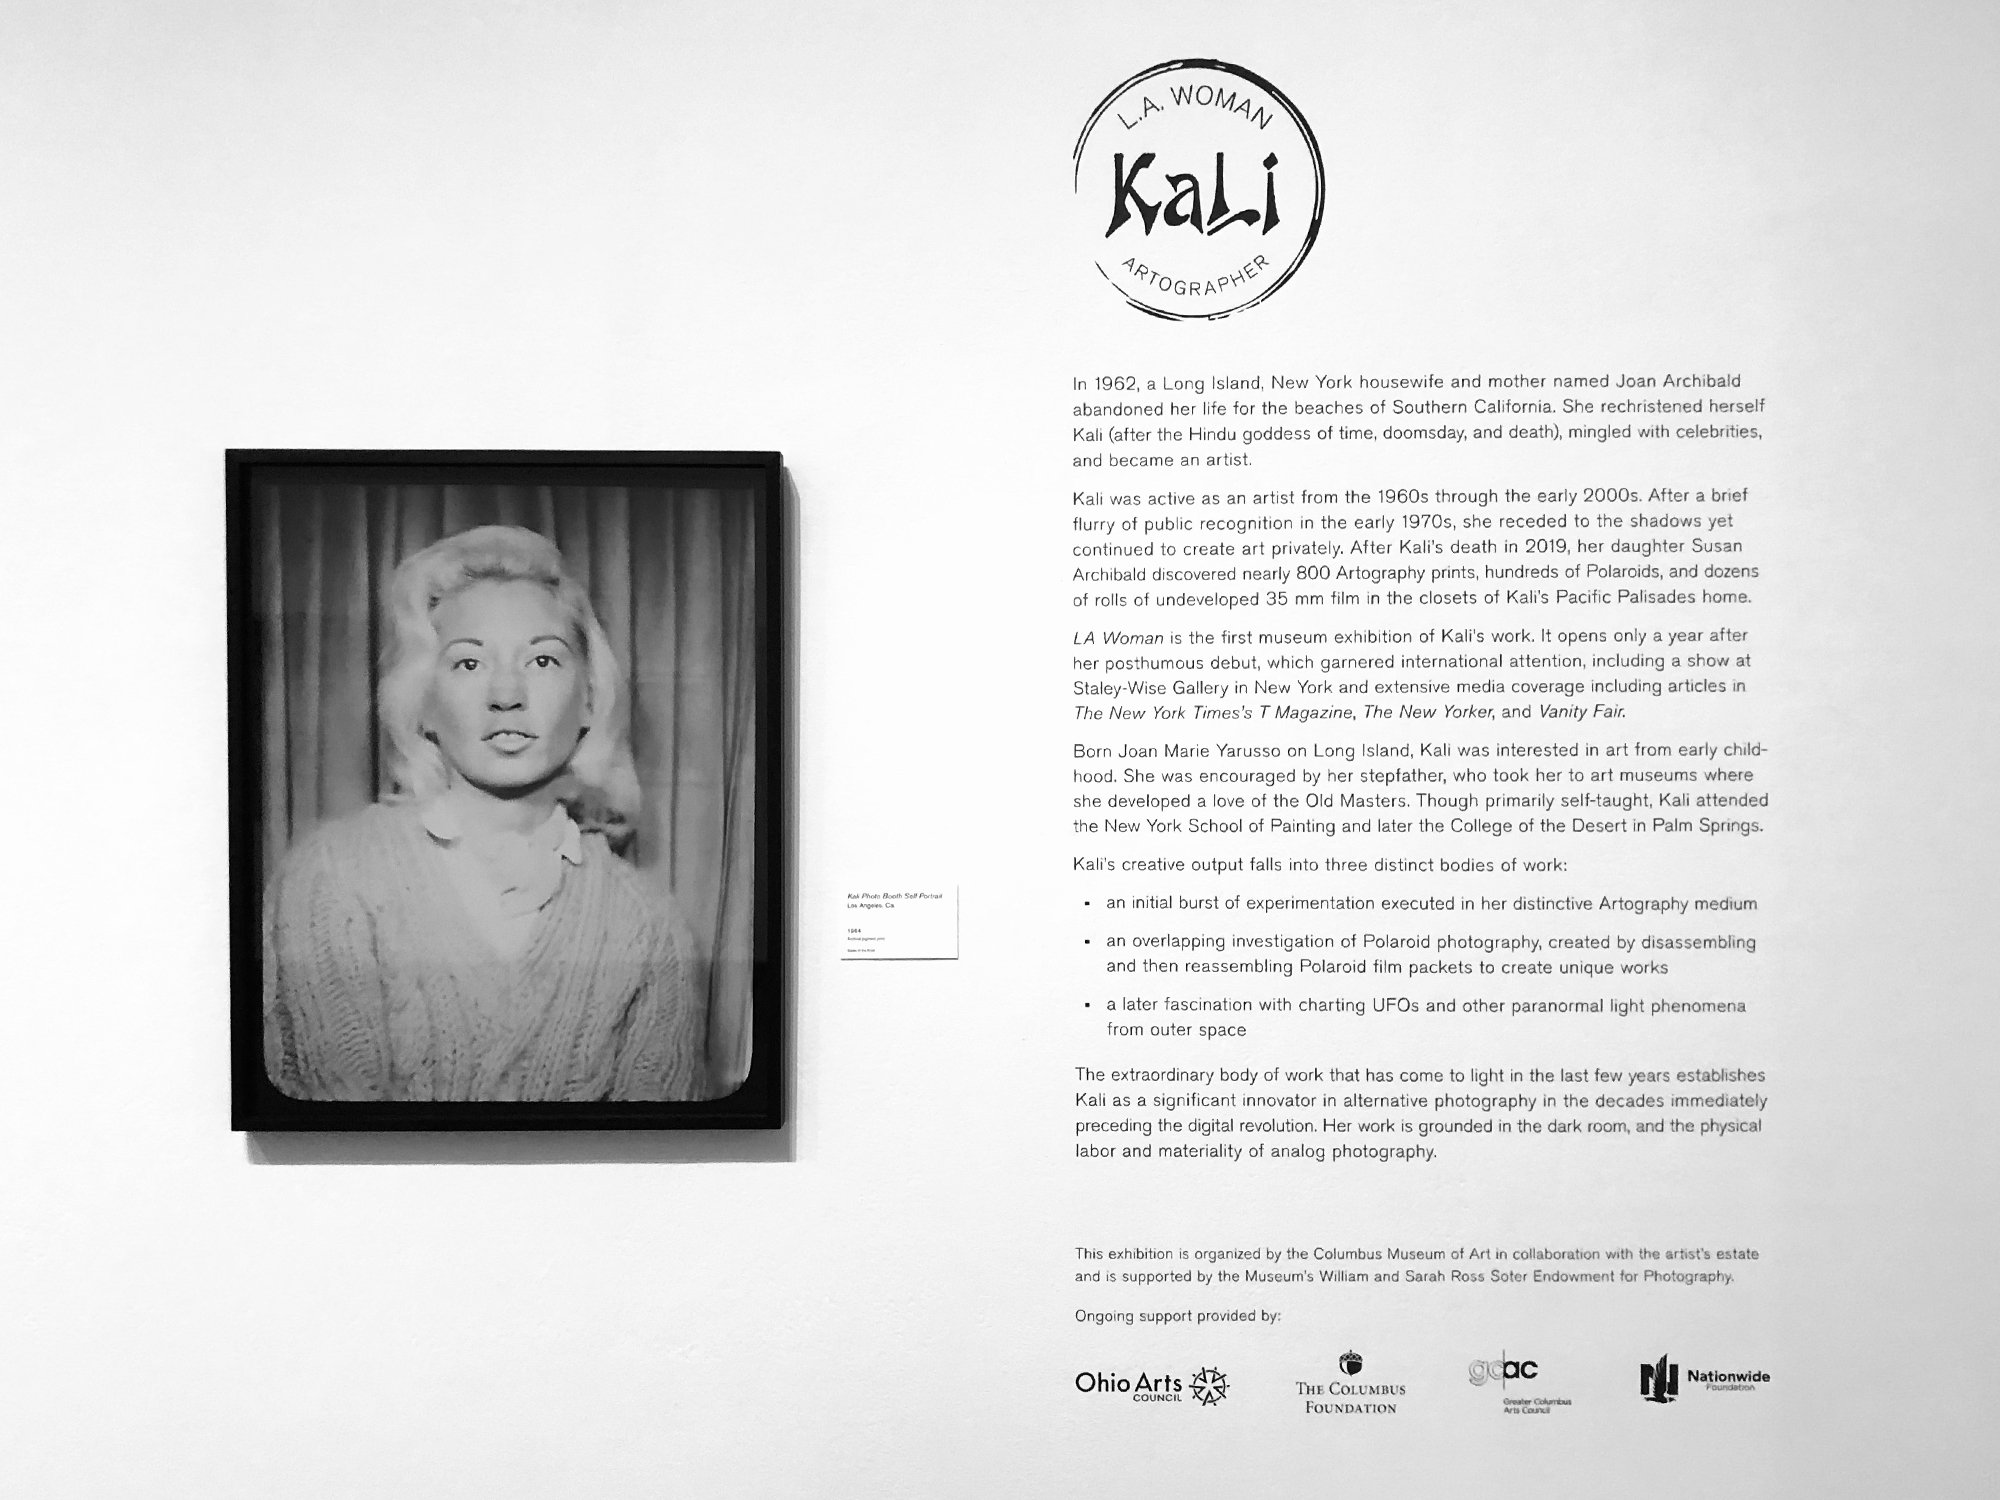 LA Woman: Kali, Artographer at the Columbus Museum of Art